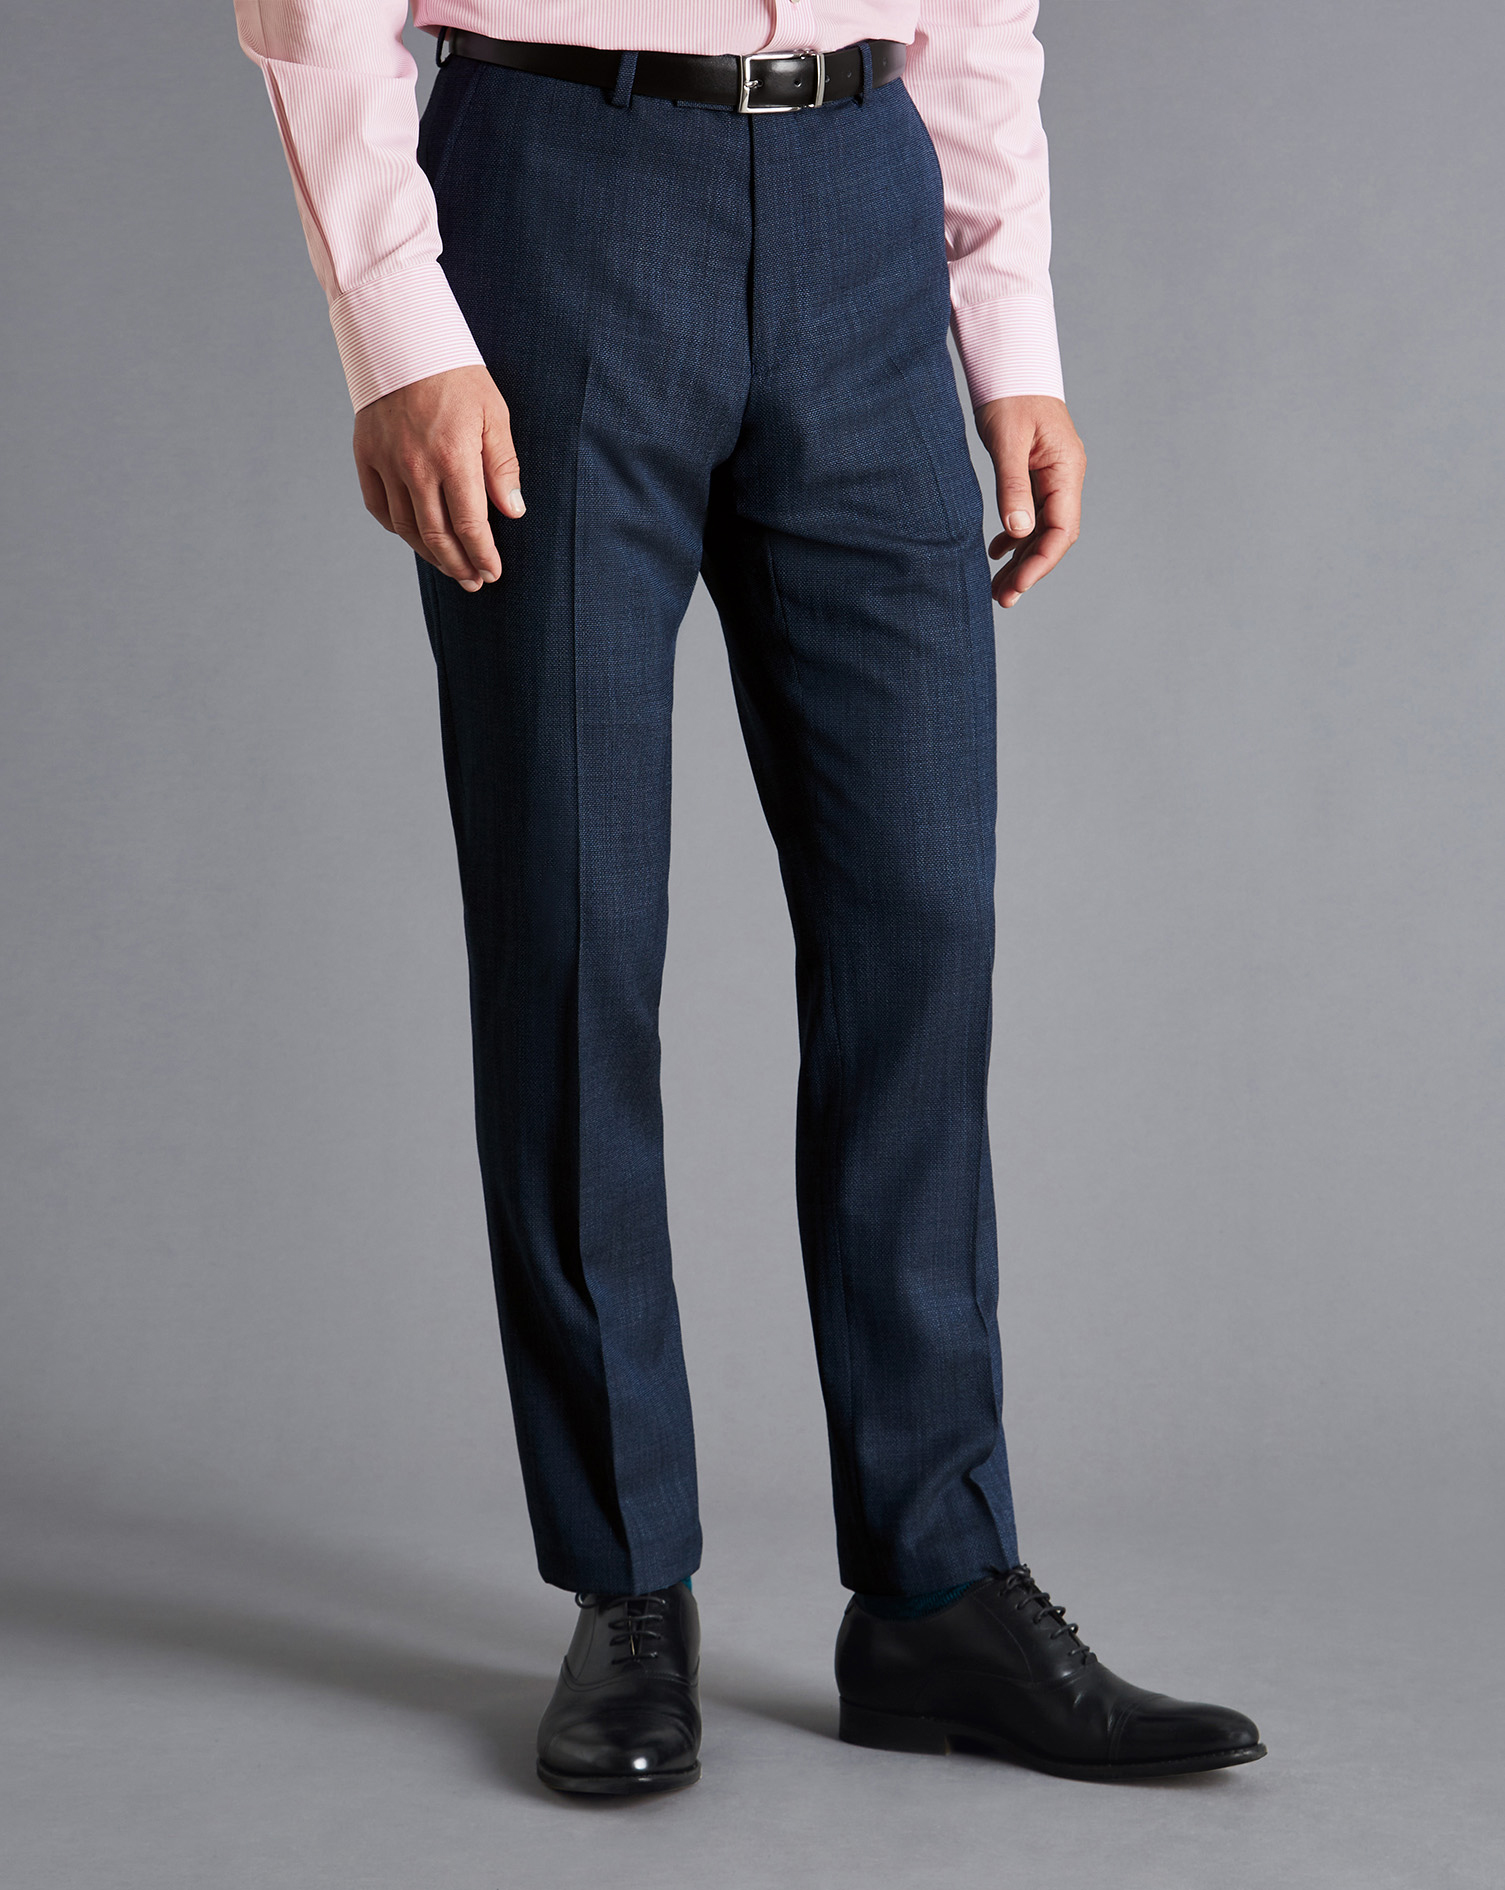 Men's Charles Tyrwhitt Textured Business Suit Trousers - Denim Blue Size 32/38 Wool
